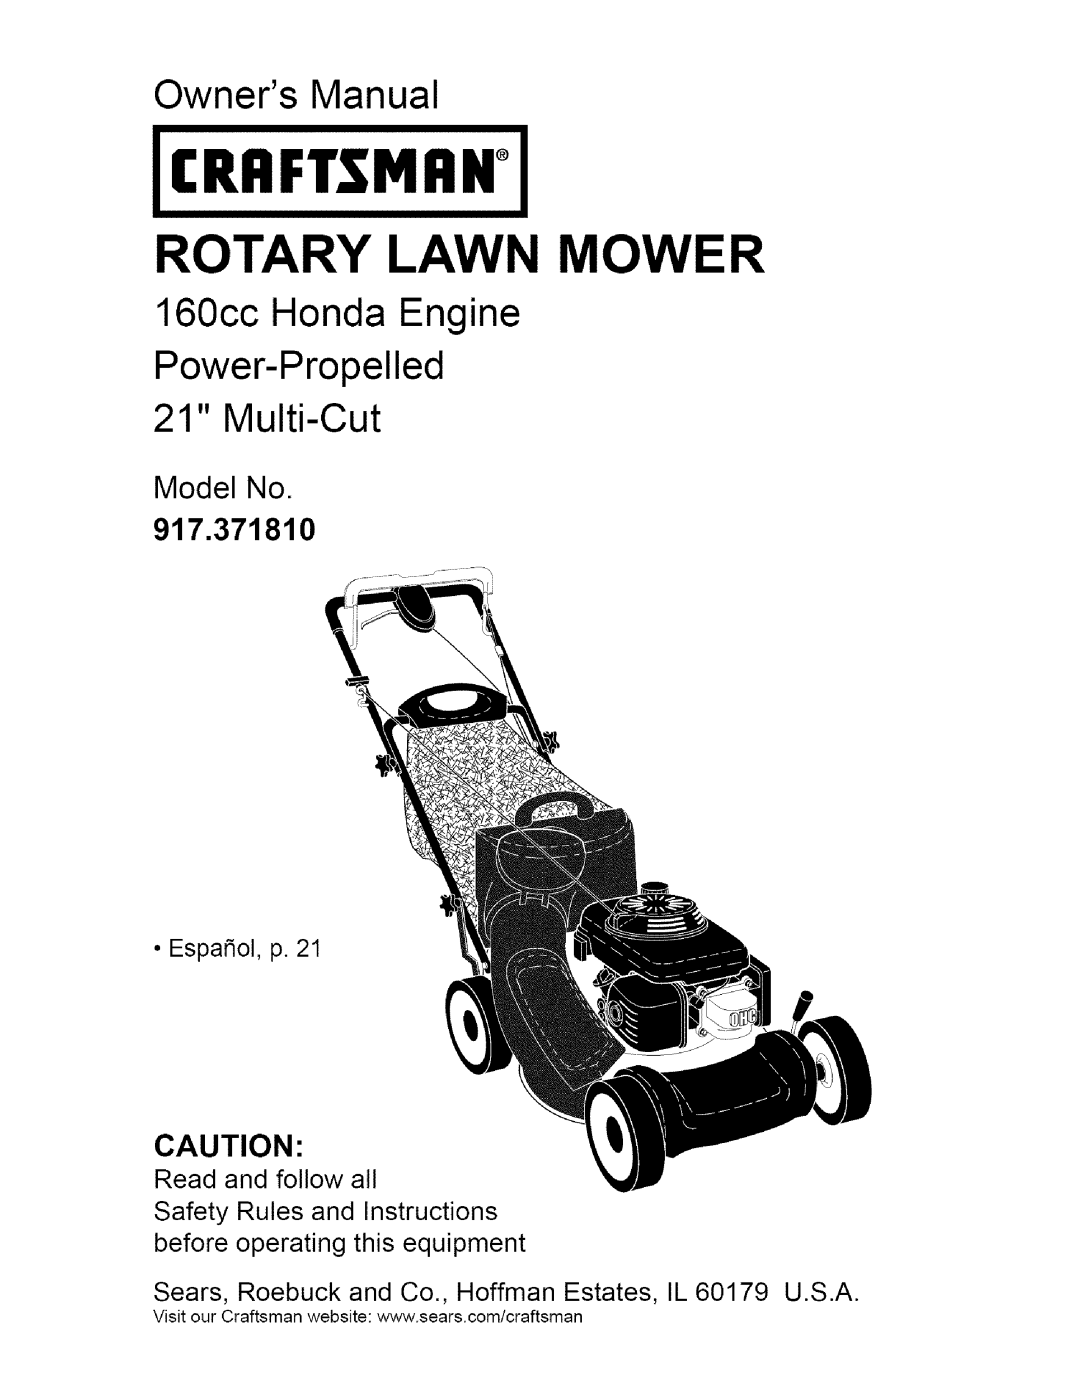 Craftsman 917.37181 owner manual Owners Manual, Crrftsmiin, Rotary Lawn Mower, 160cc Honda Engine Power-Propelled 